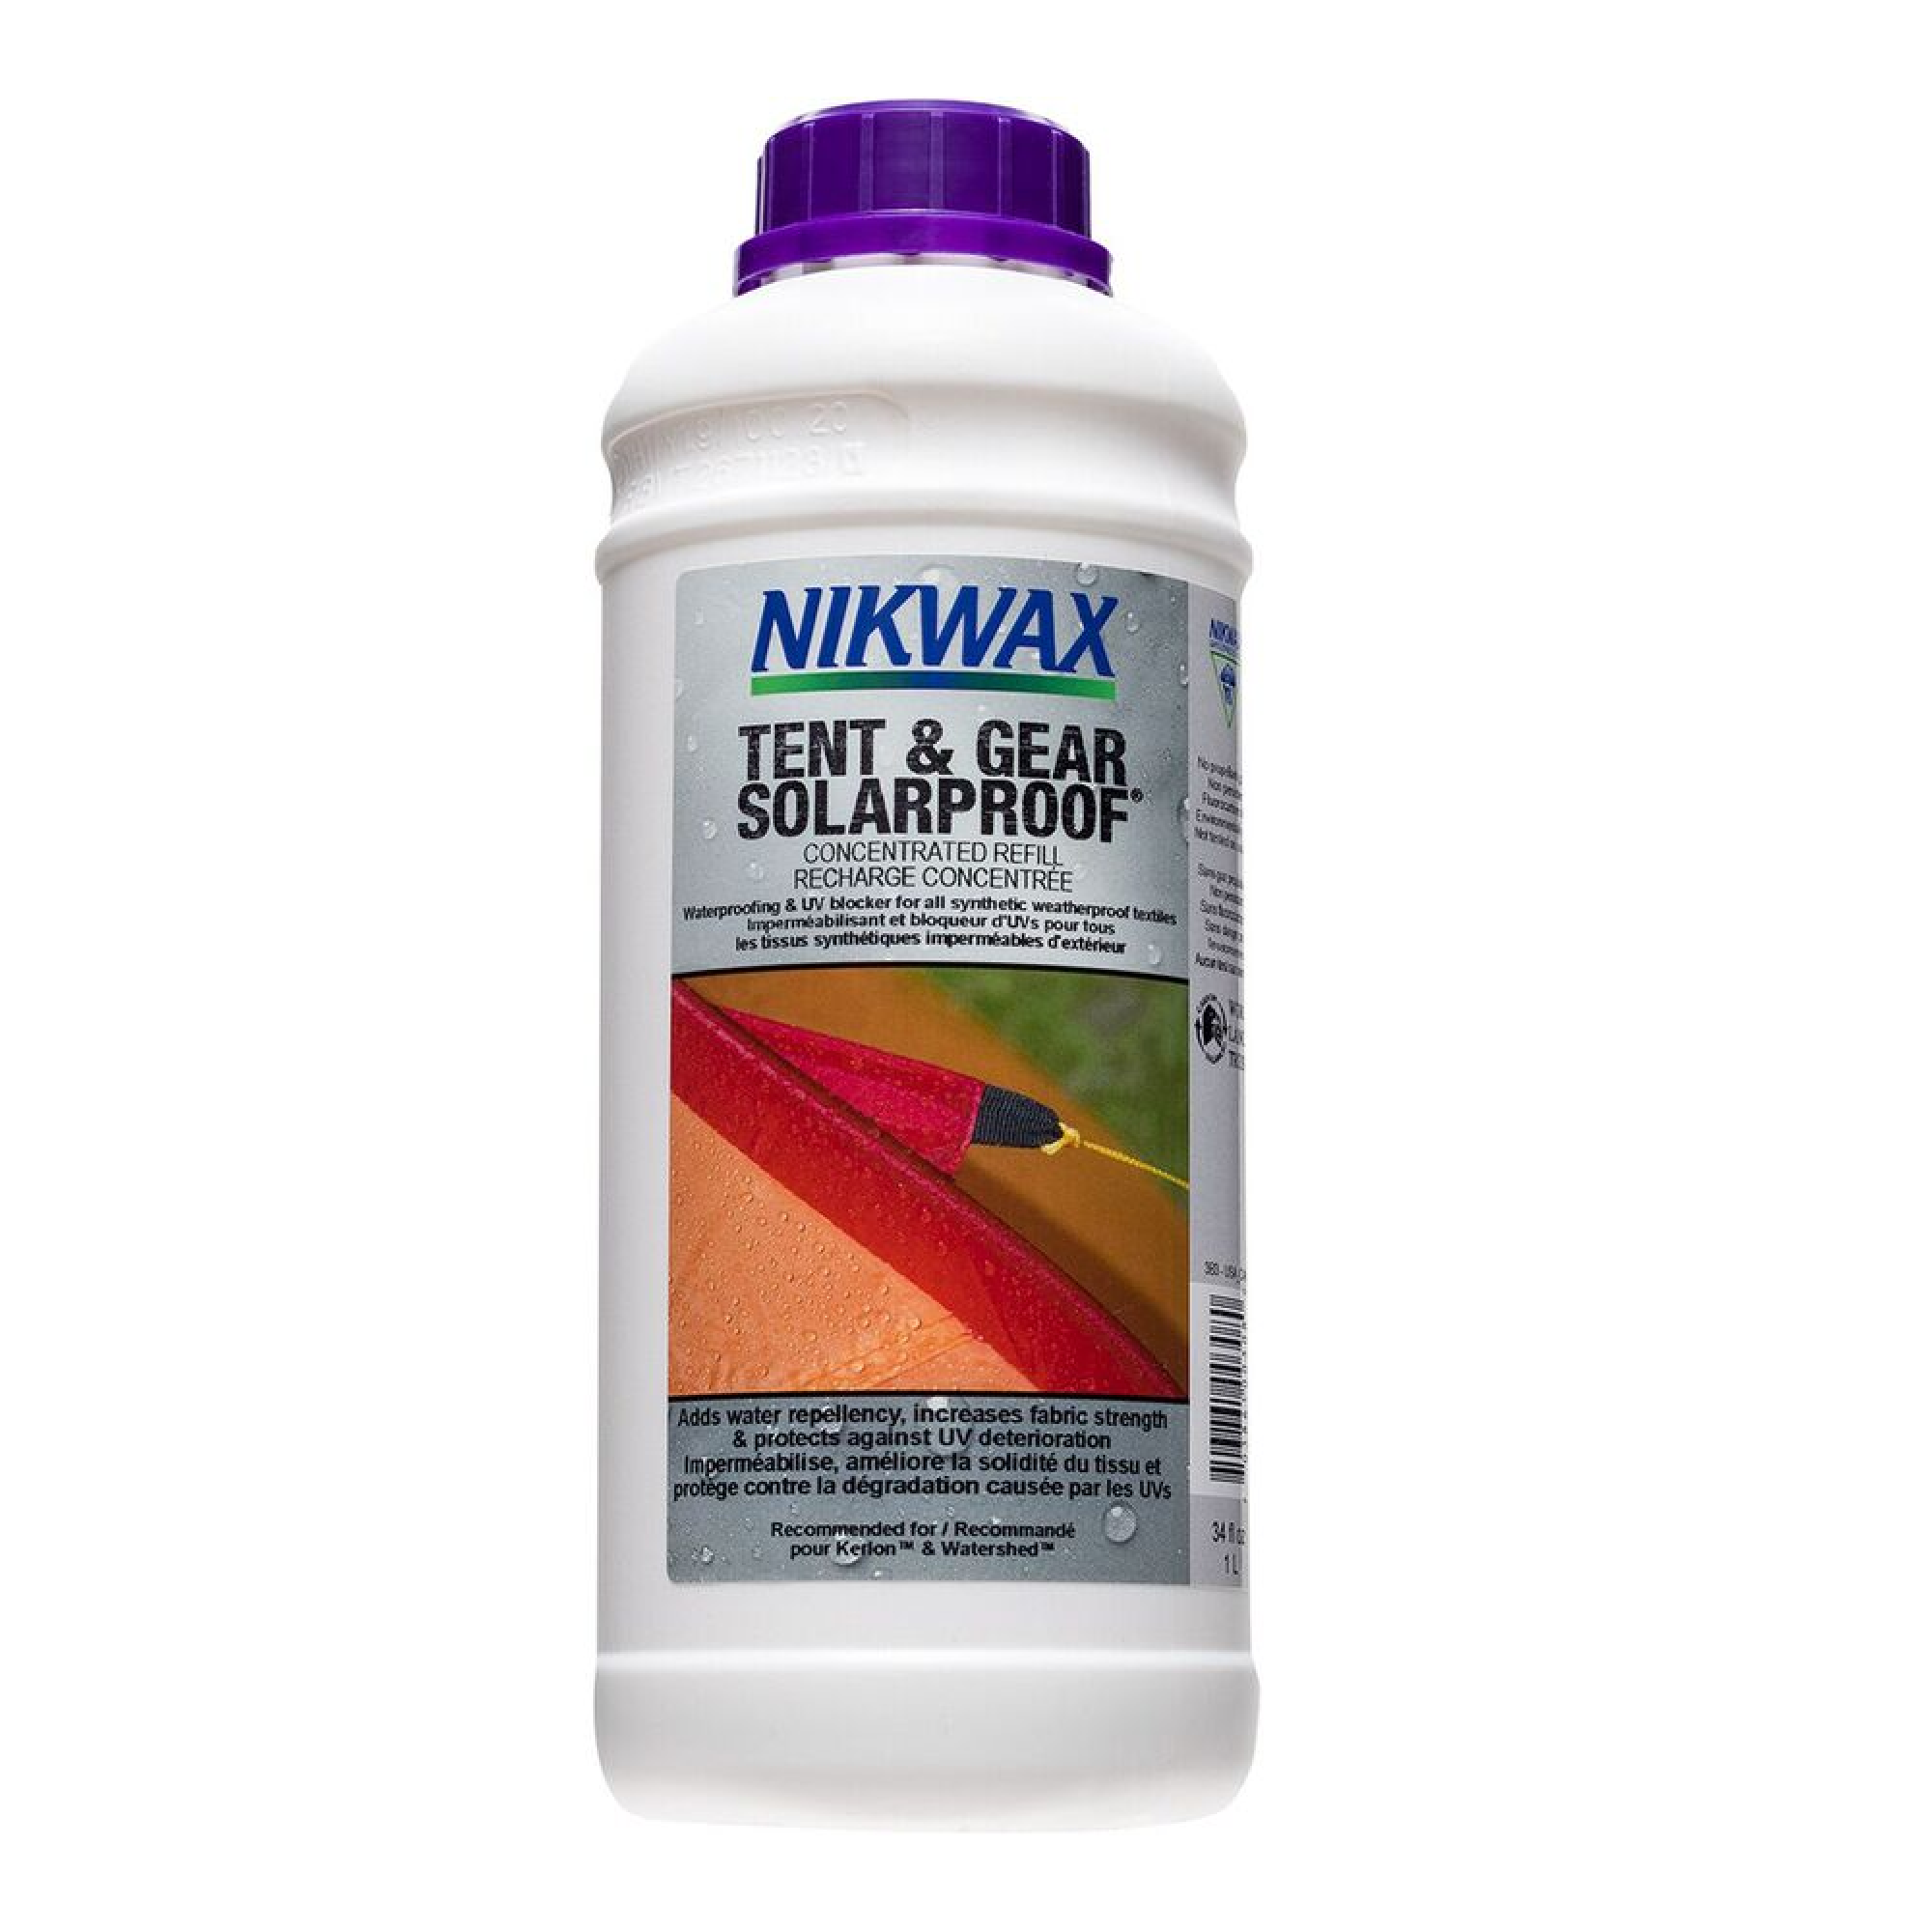 Nikwax (Nikwax) LOFT Tech Wash 1L [Detergent] (Direct from Japan)